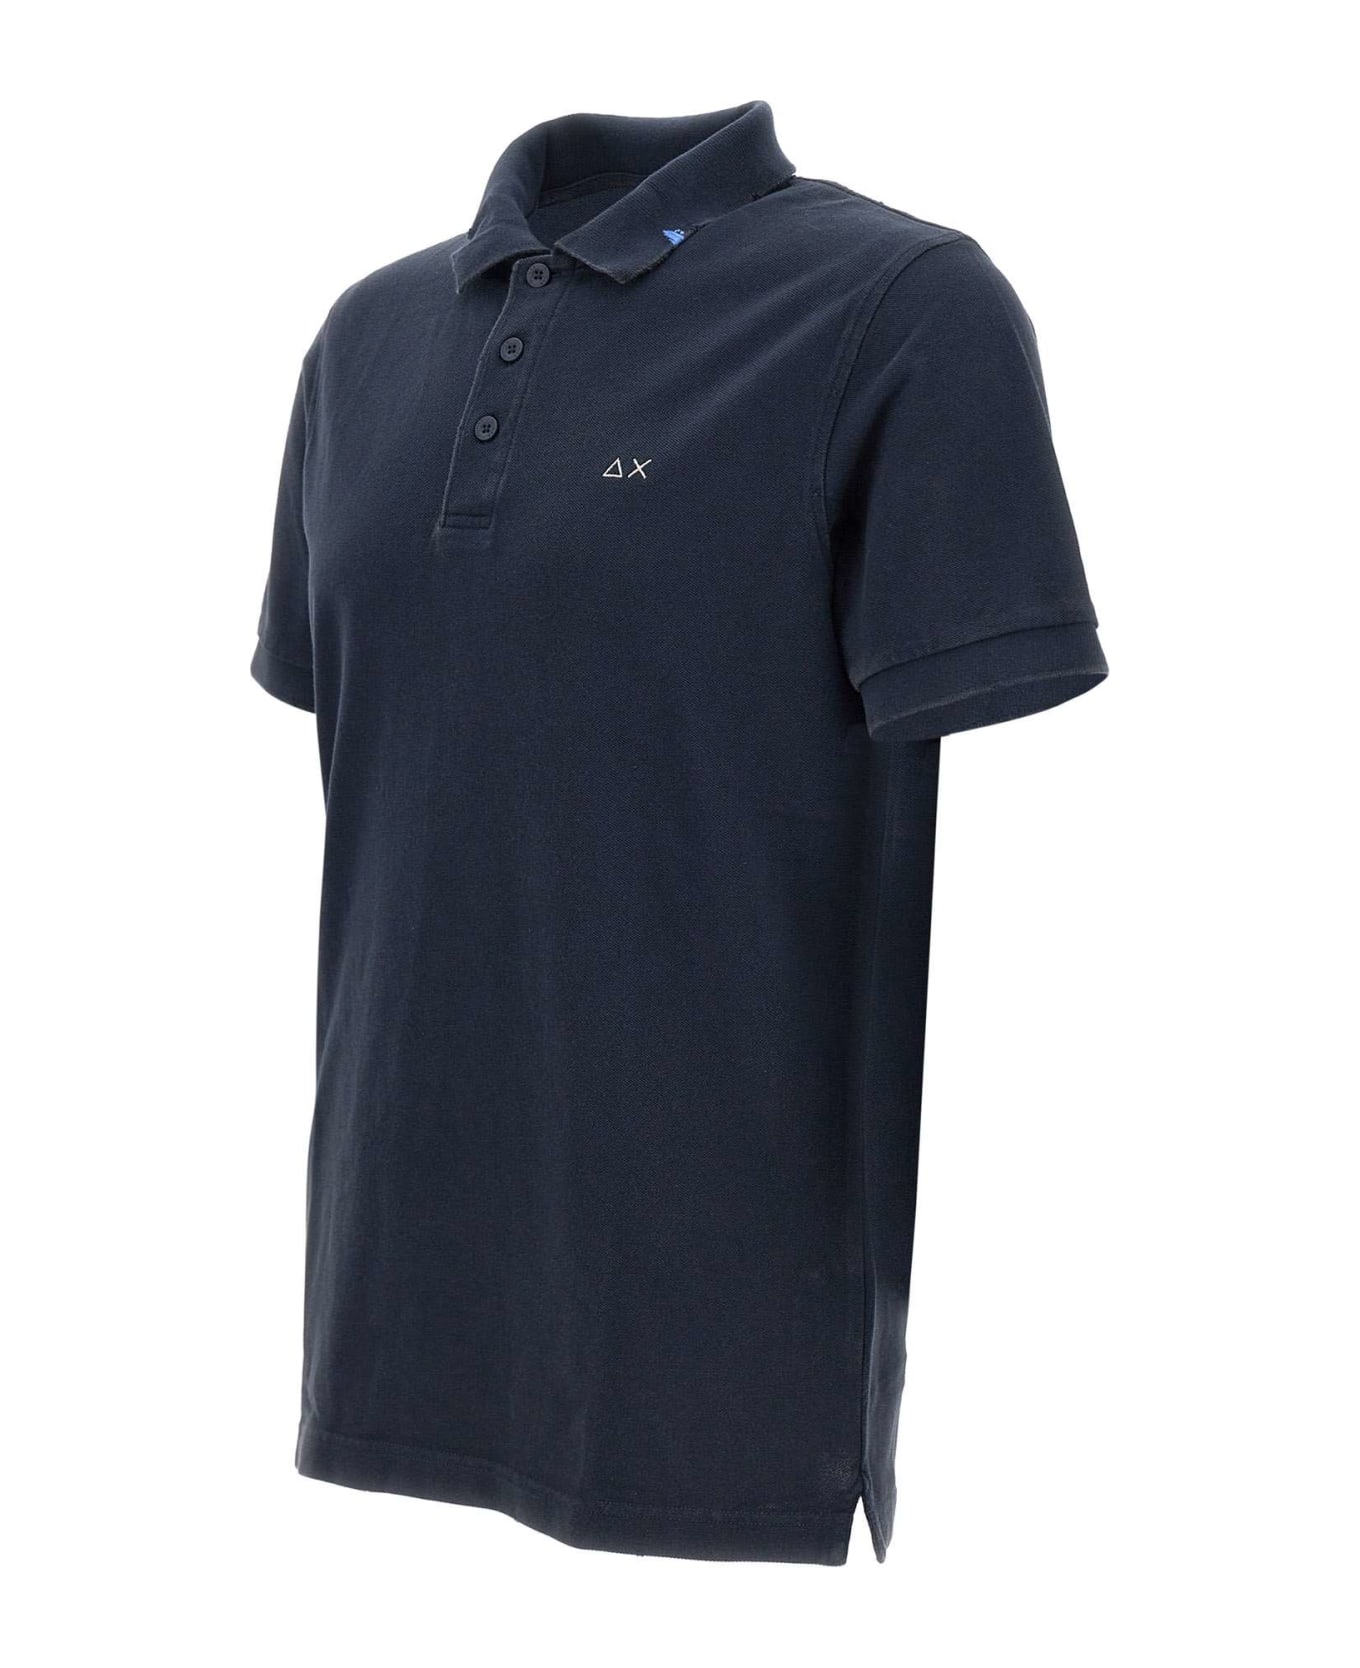 Sun 68 "solid" Cotton Polo Shirt - BLUE ポロシャツ